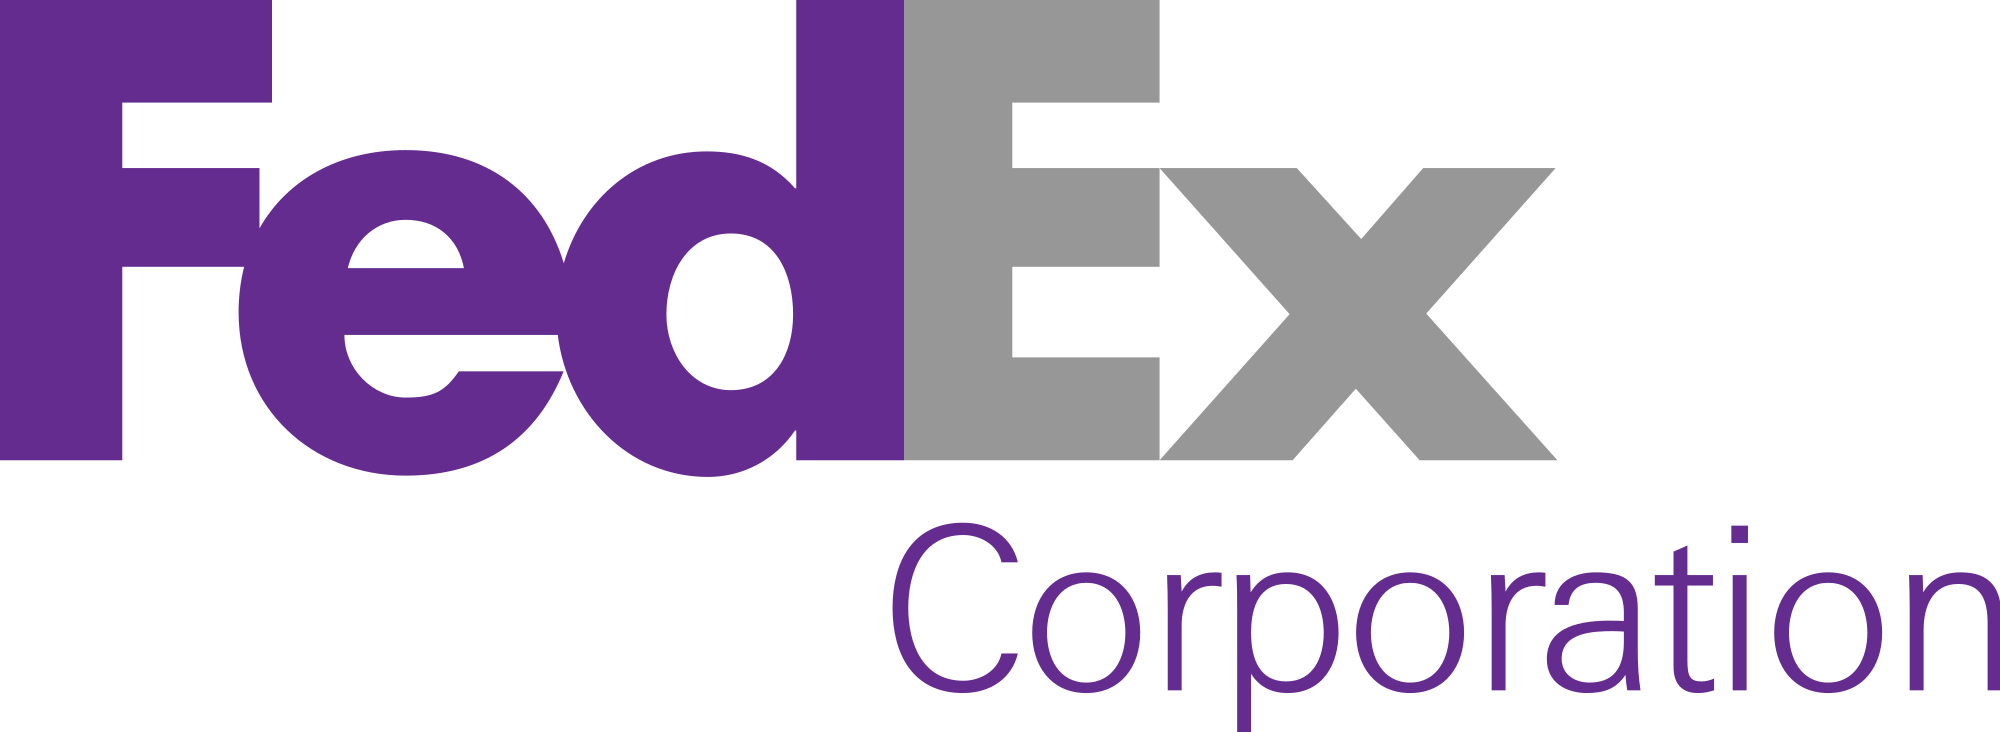 Purple Corporate Logo - FedEx Corporation logo.svg